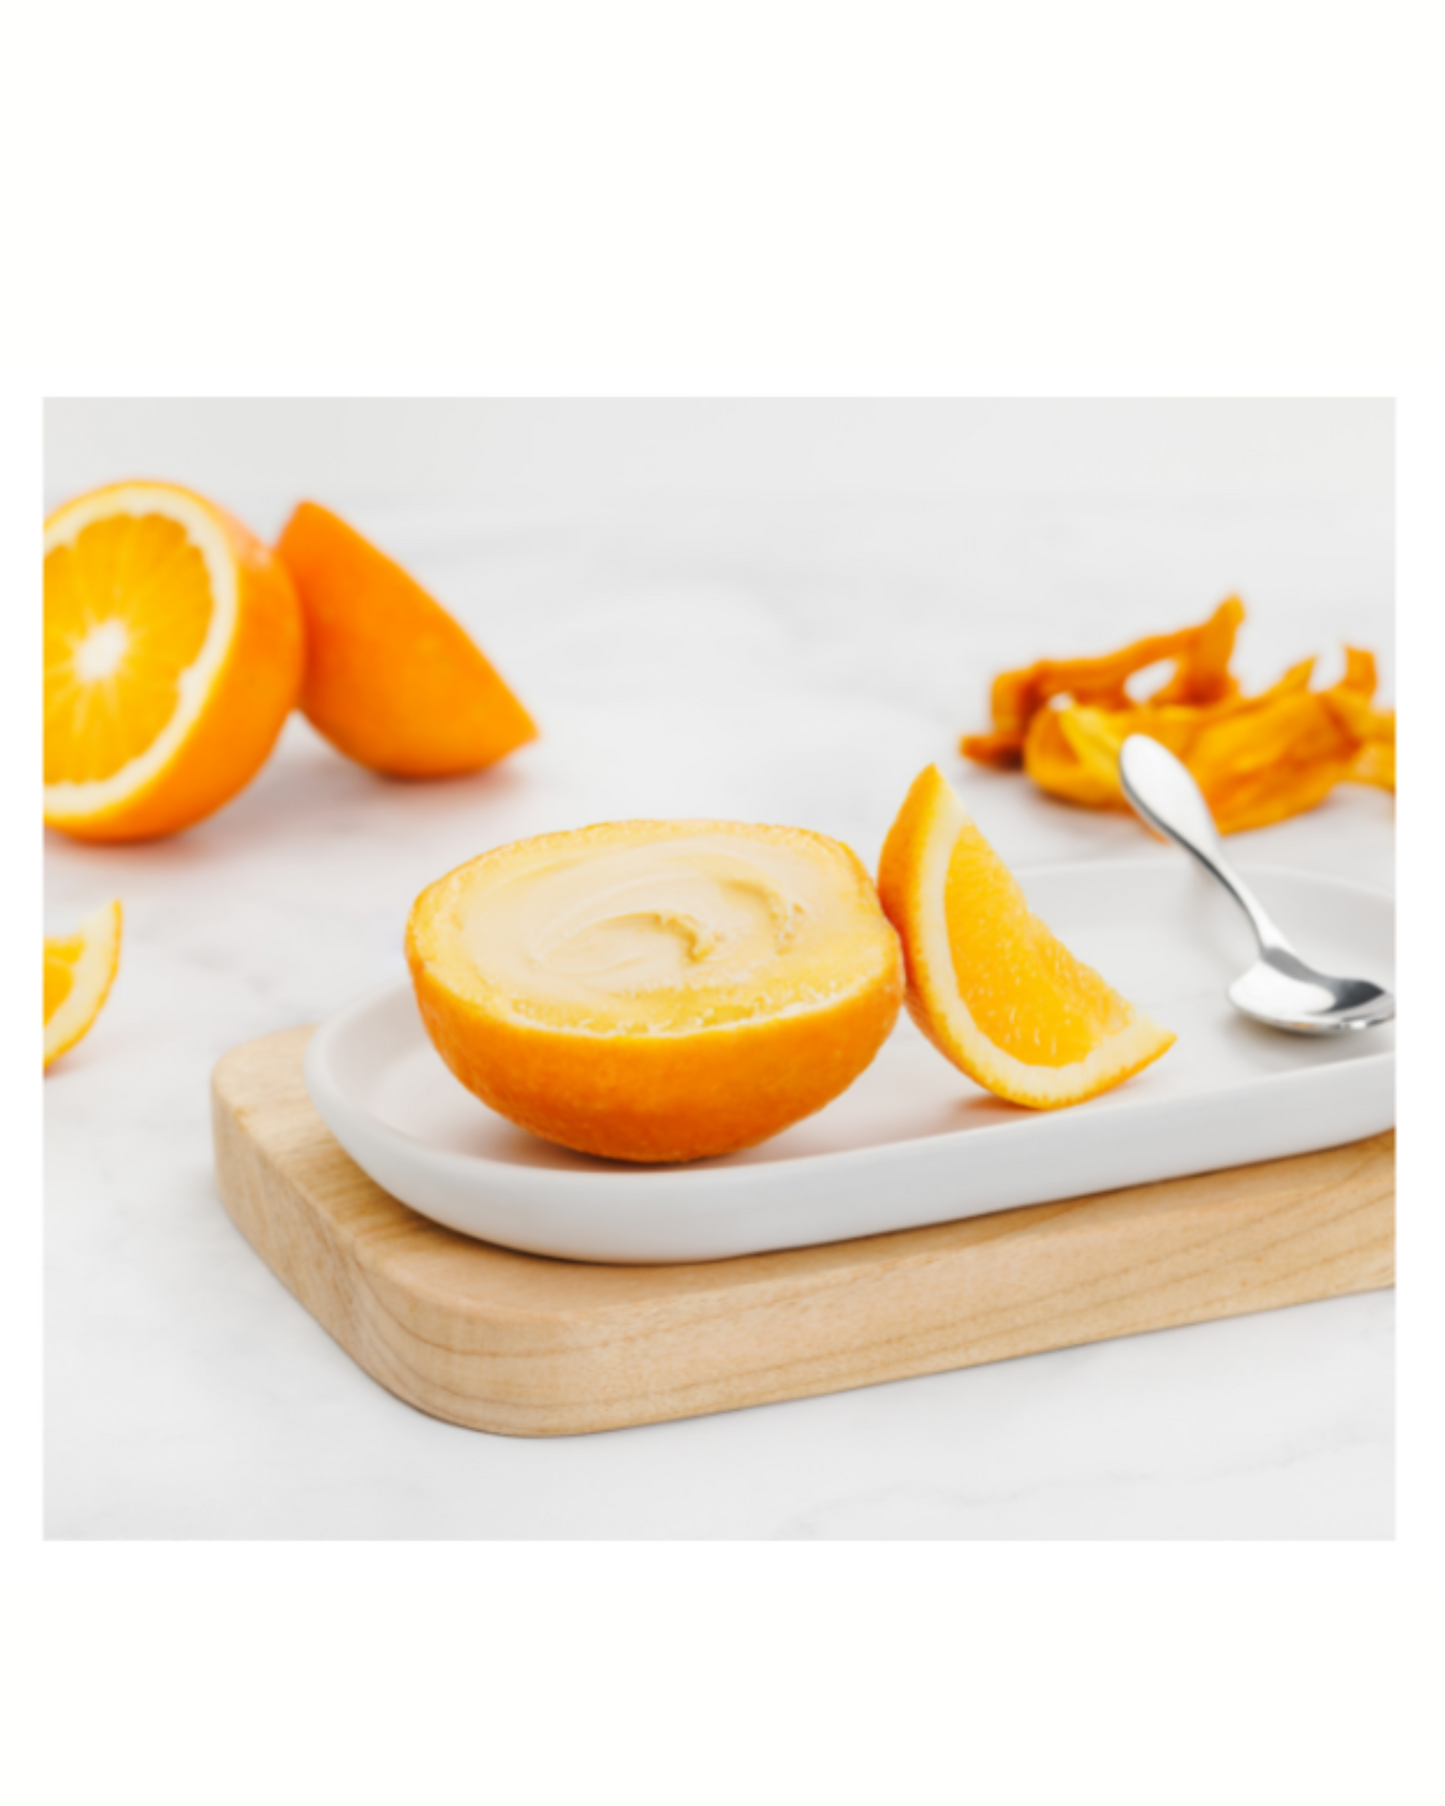 Mandarin Orange Hand-Made Sorbet in Natural Fruit Shell